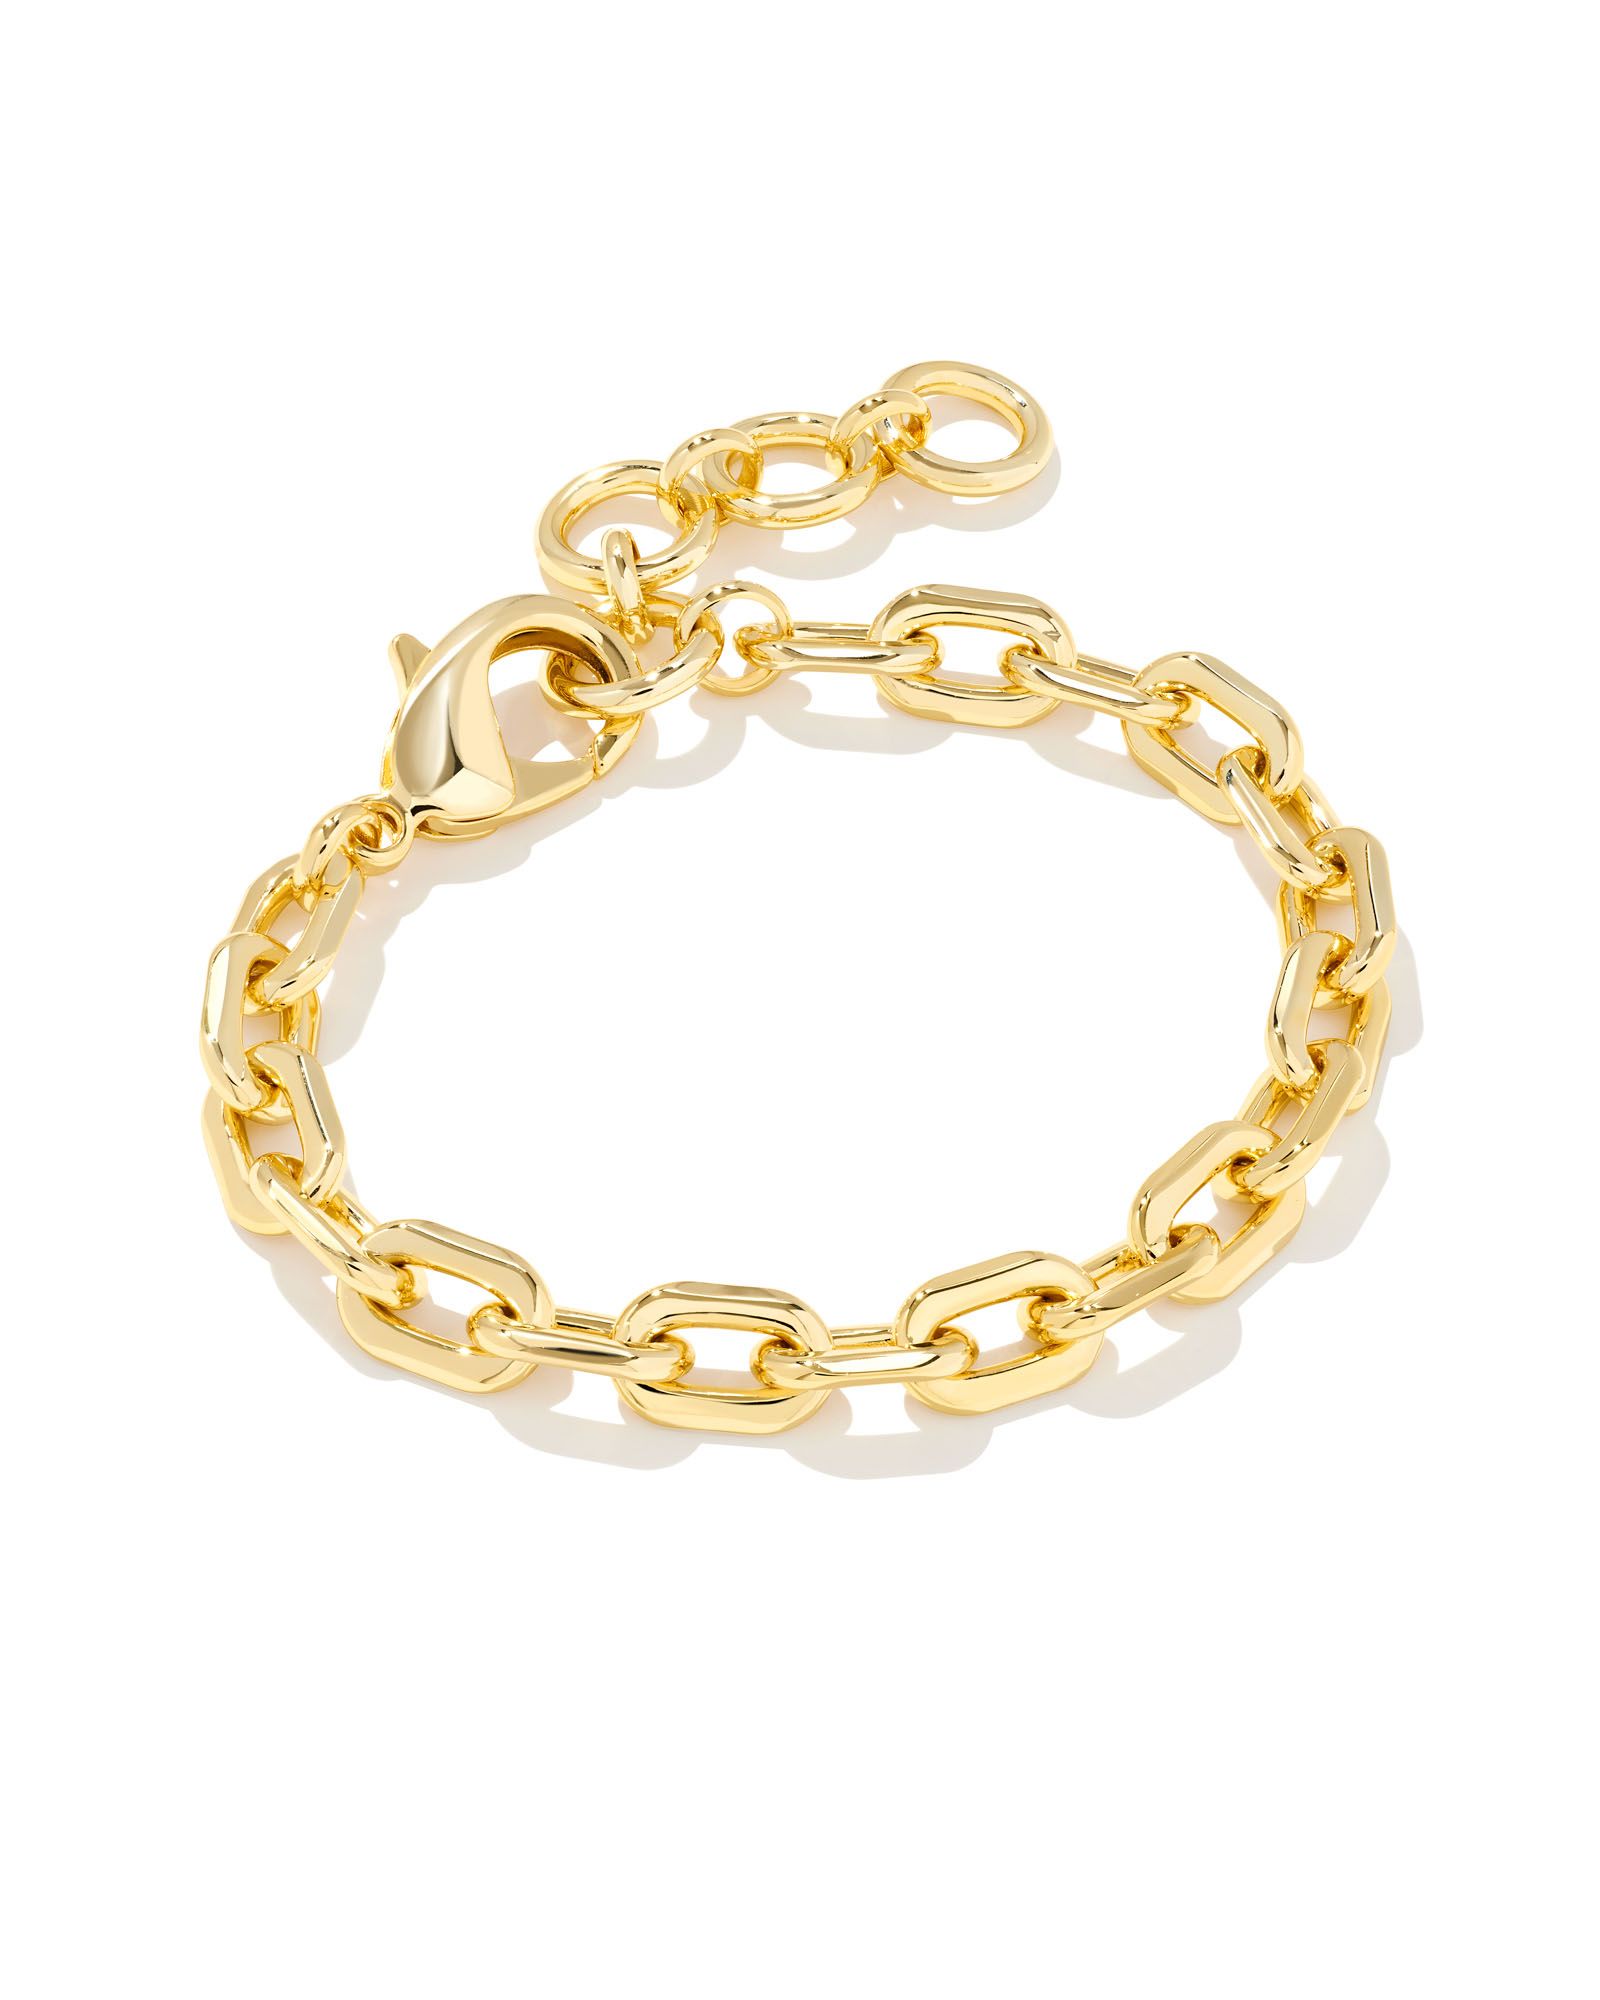 Korinne Chain Bracelet in Gold | Kendra Scott | Kendra Scott